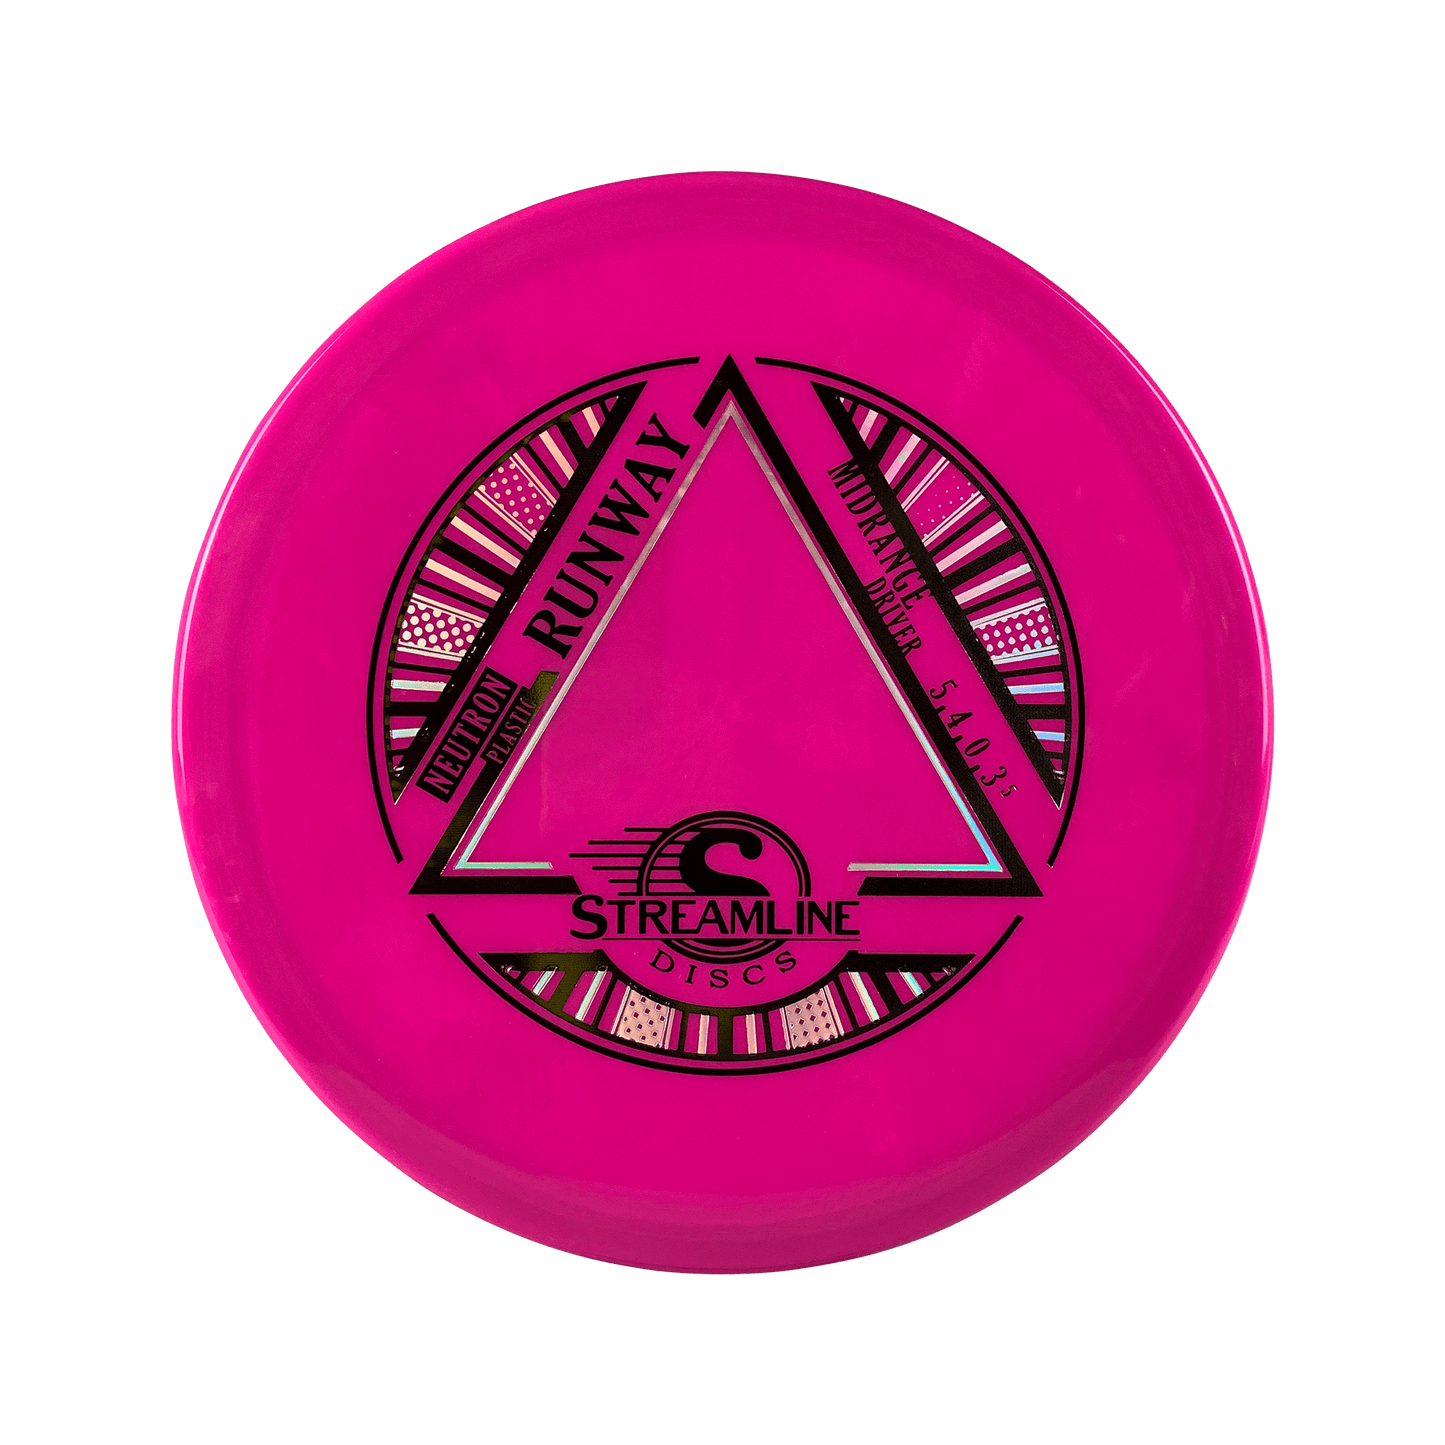 Neutron Runway Disc Streamline hot pink 178 